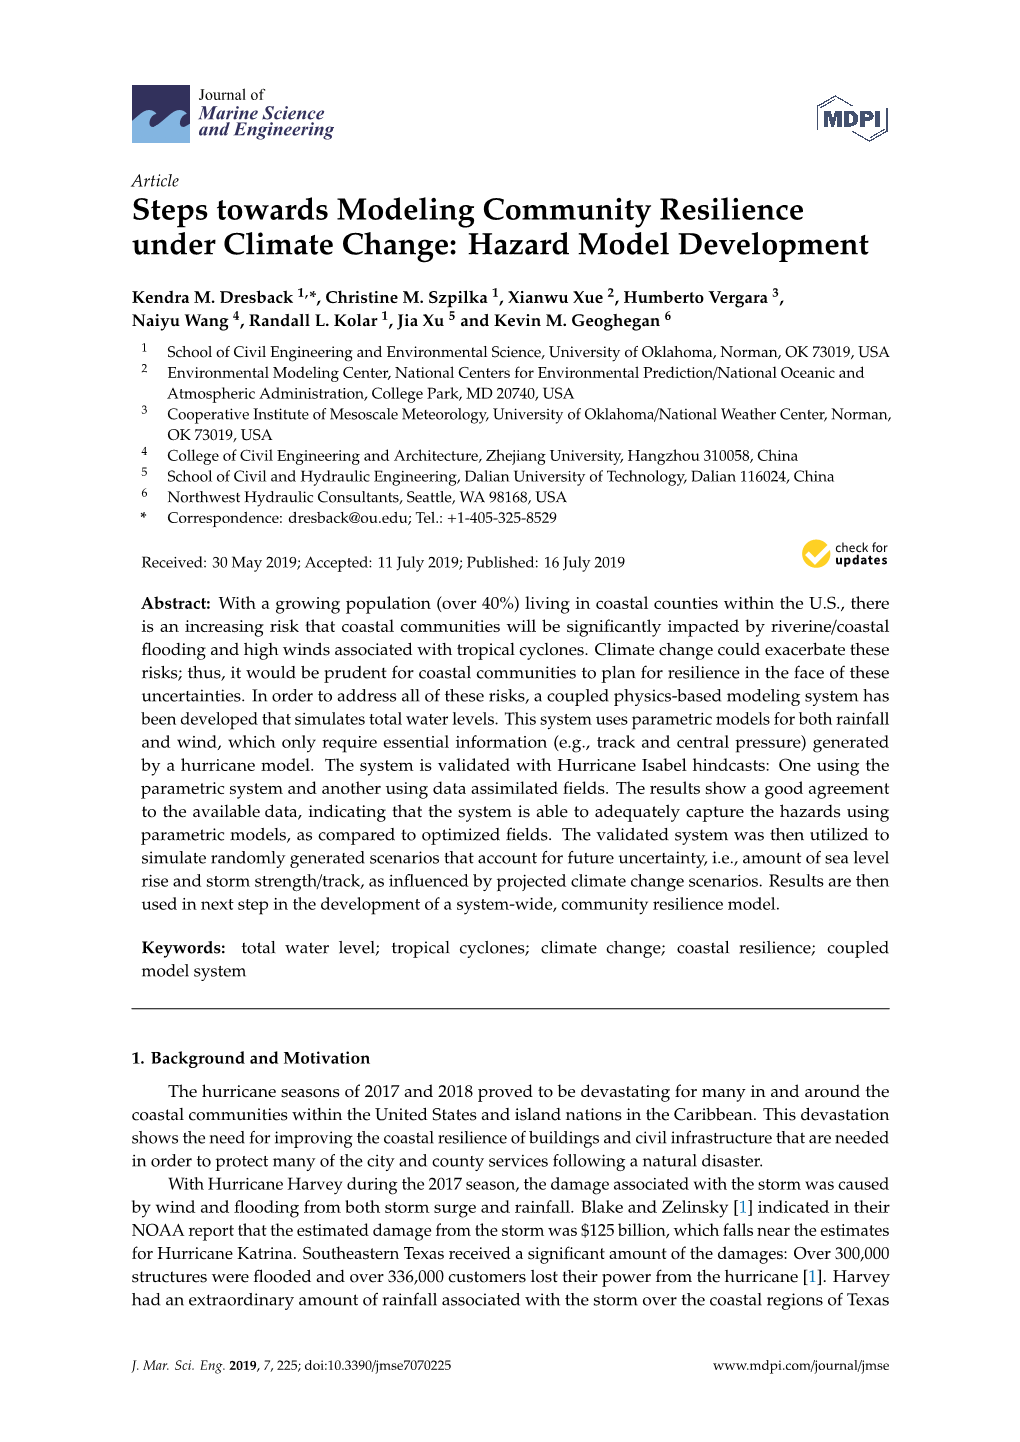 Steps Towards Modeling Community Resilience Under Climate Change: Hazard Model Development